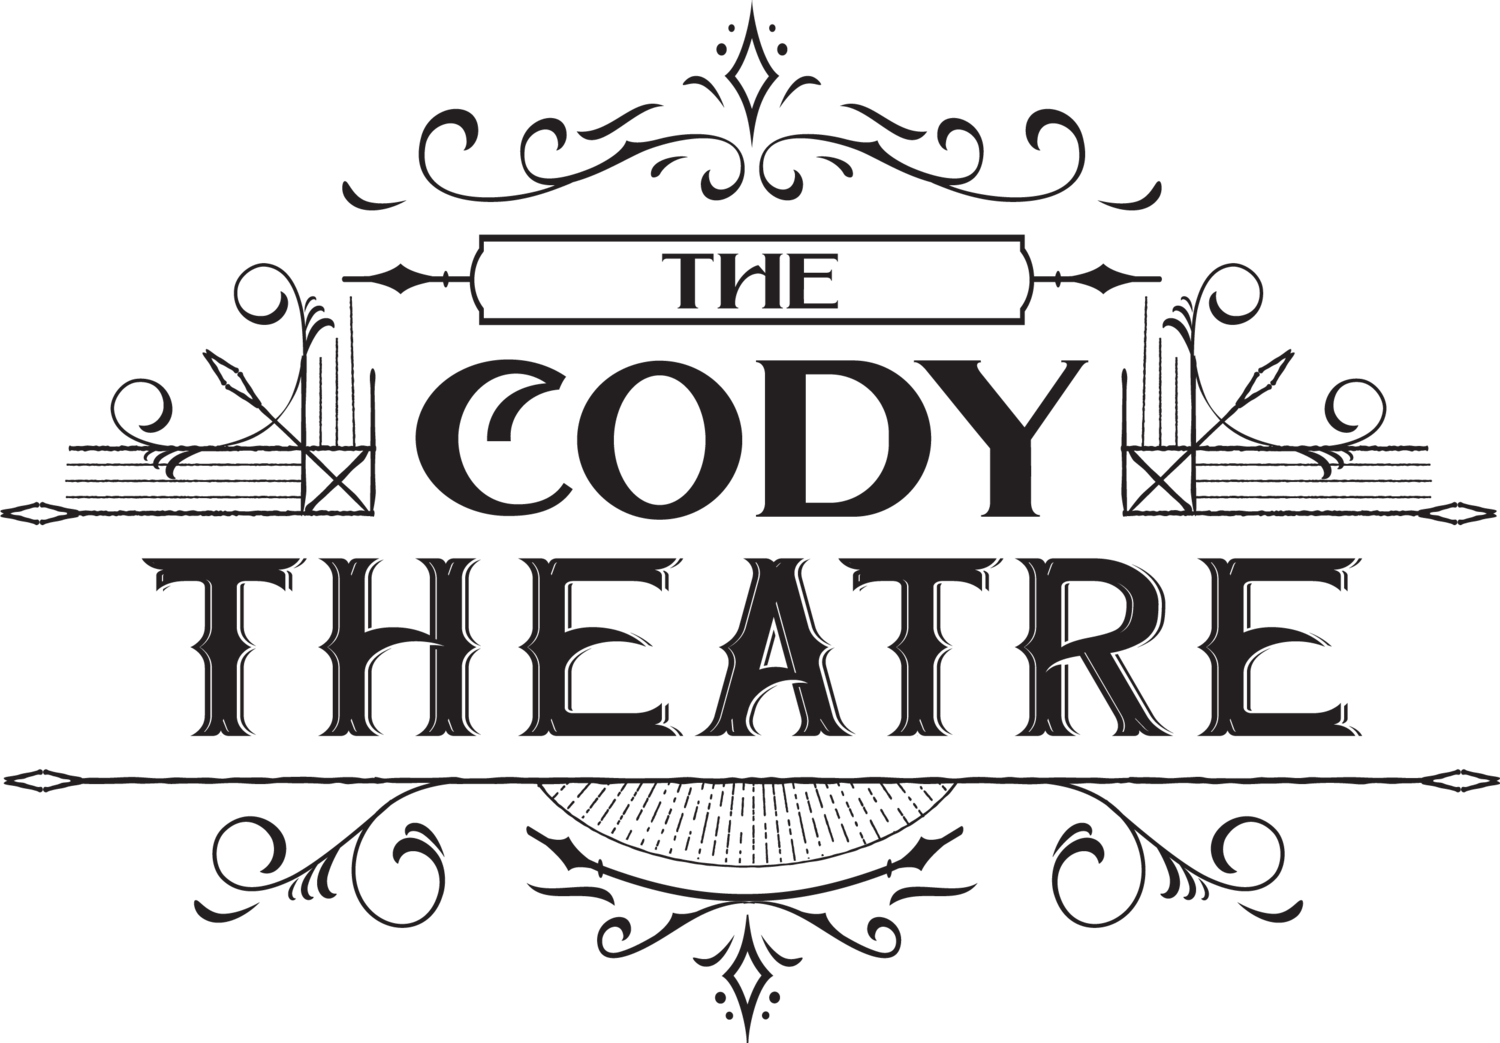 The Cody Theatre